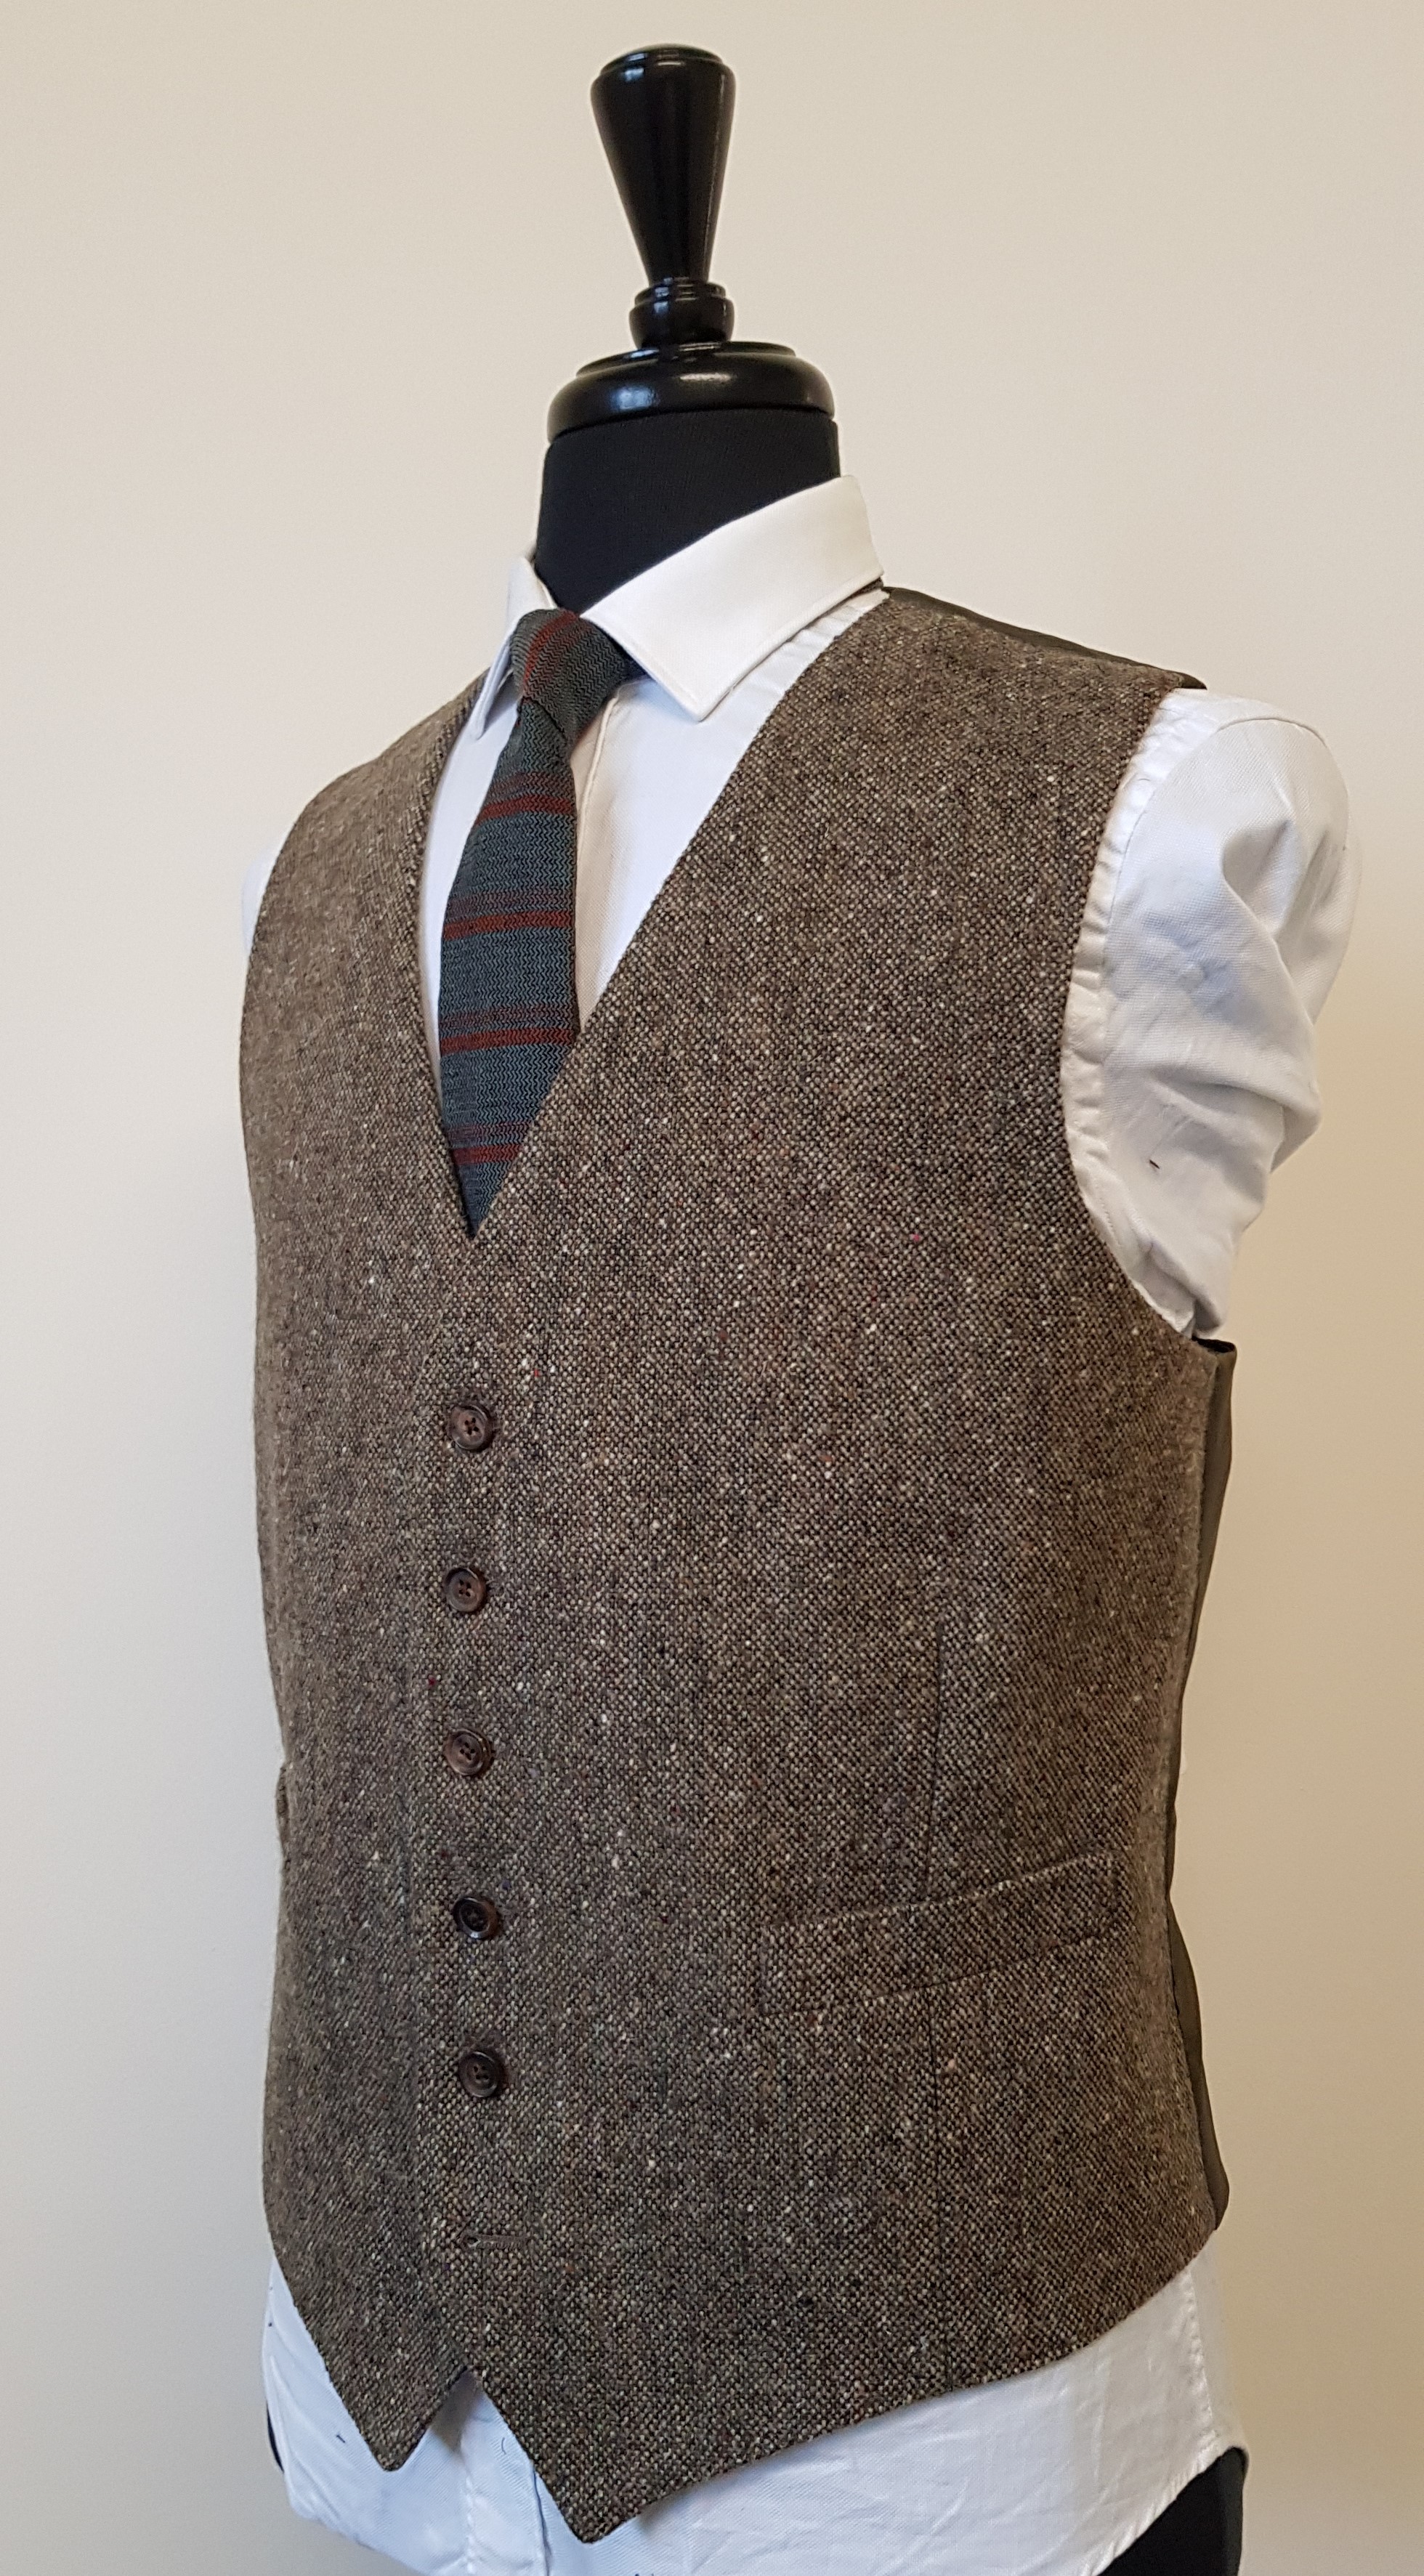 3 Piece Suit in Molloy Donegal Tweed — TWEED ADDICT